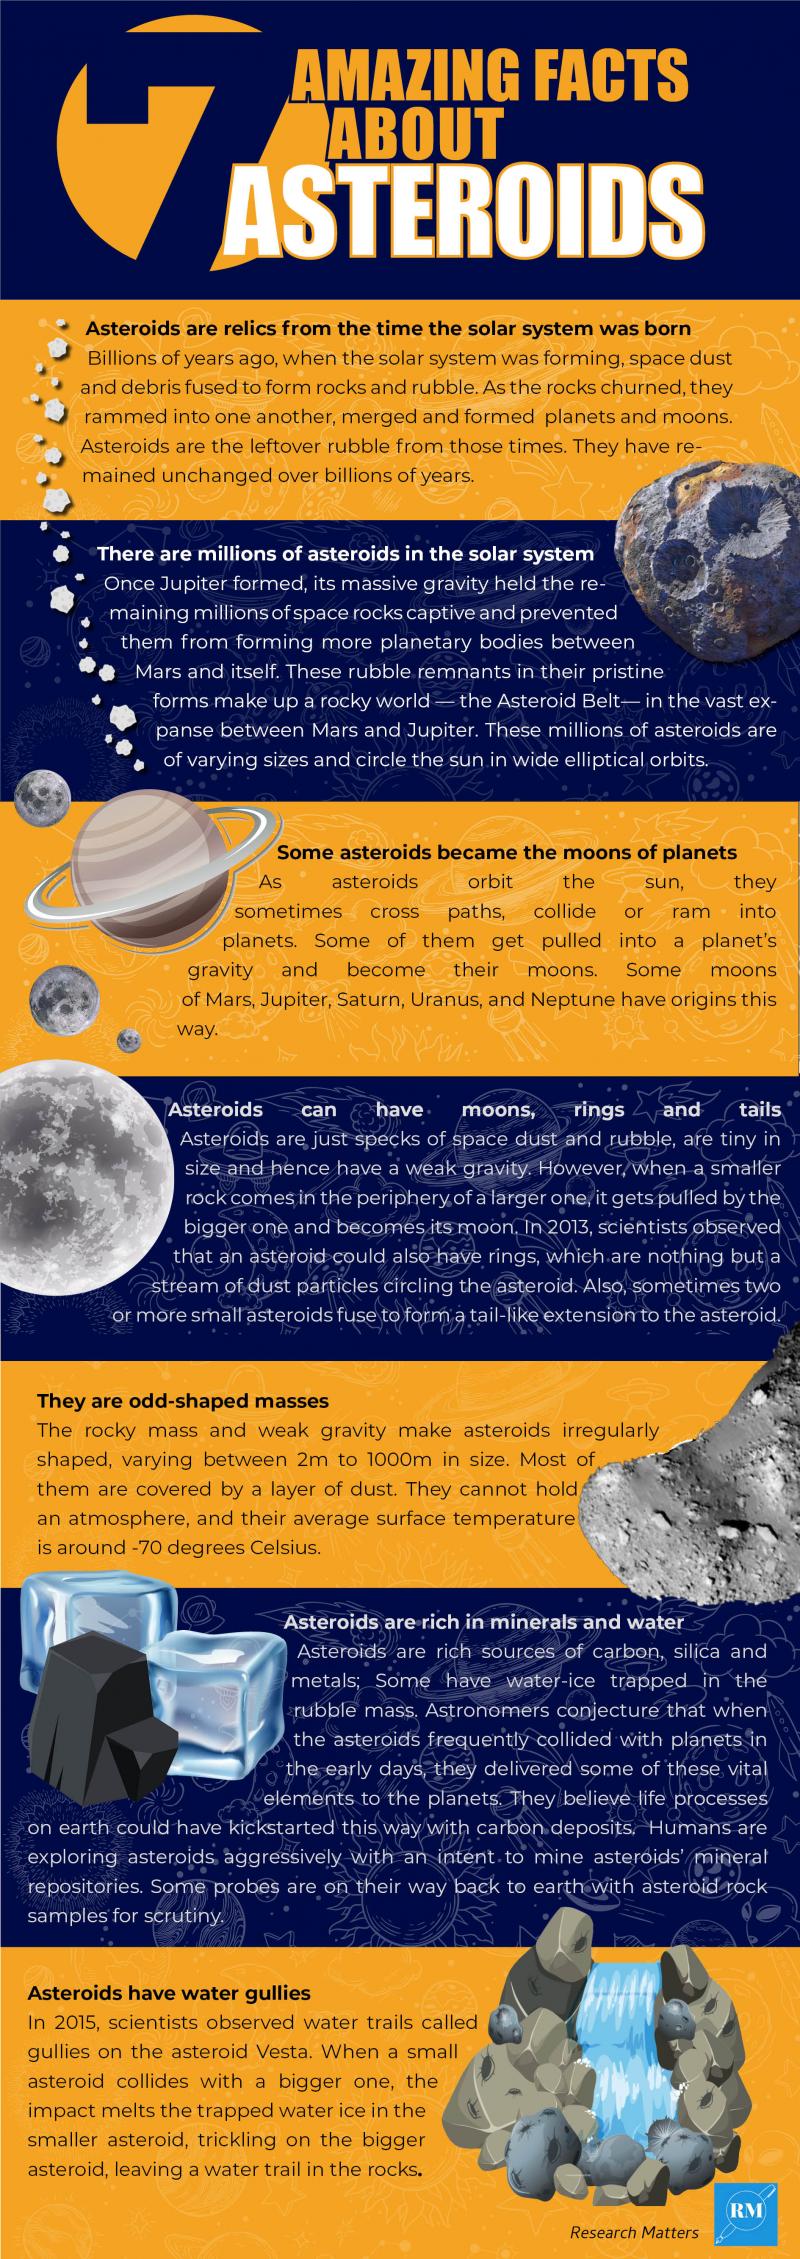 asteroid vesta facts